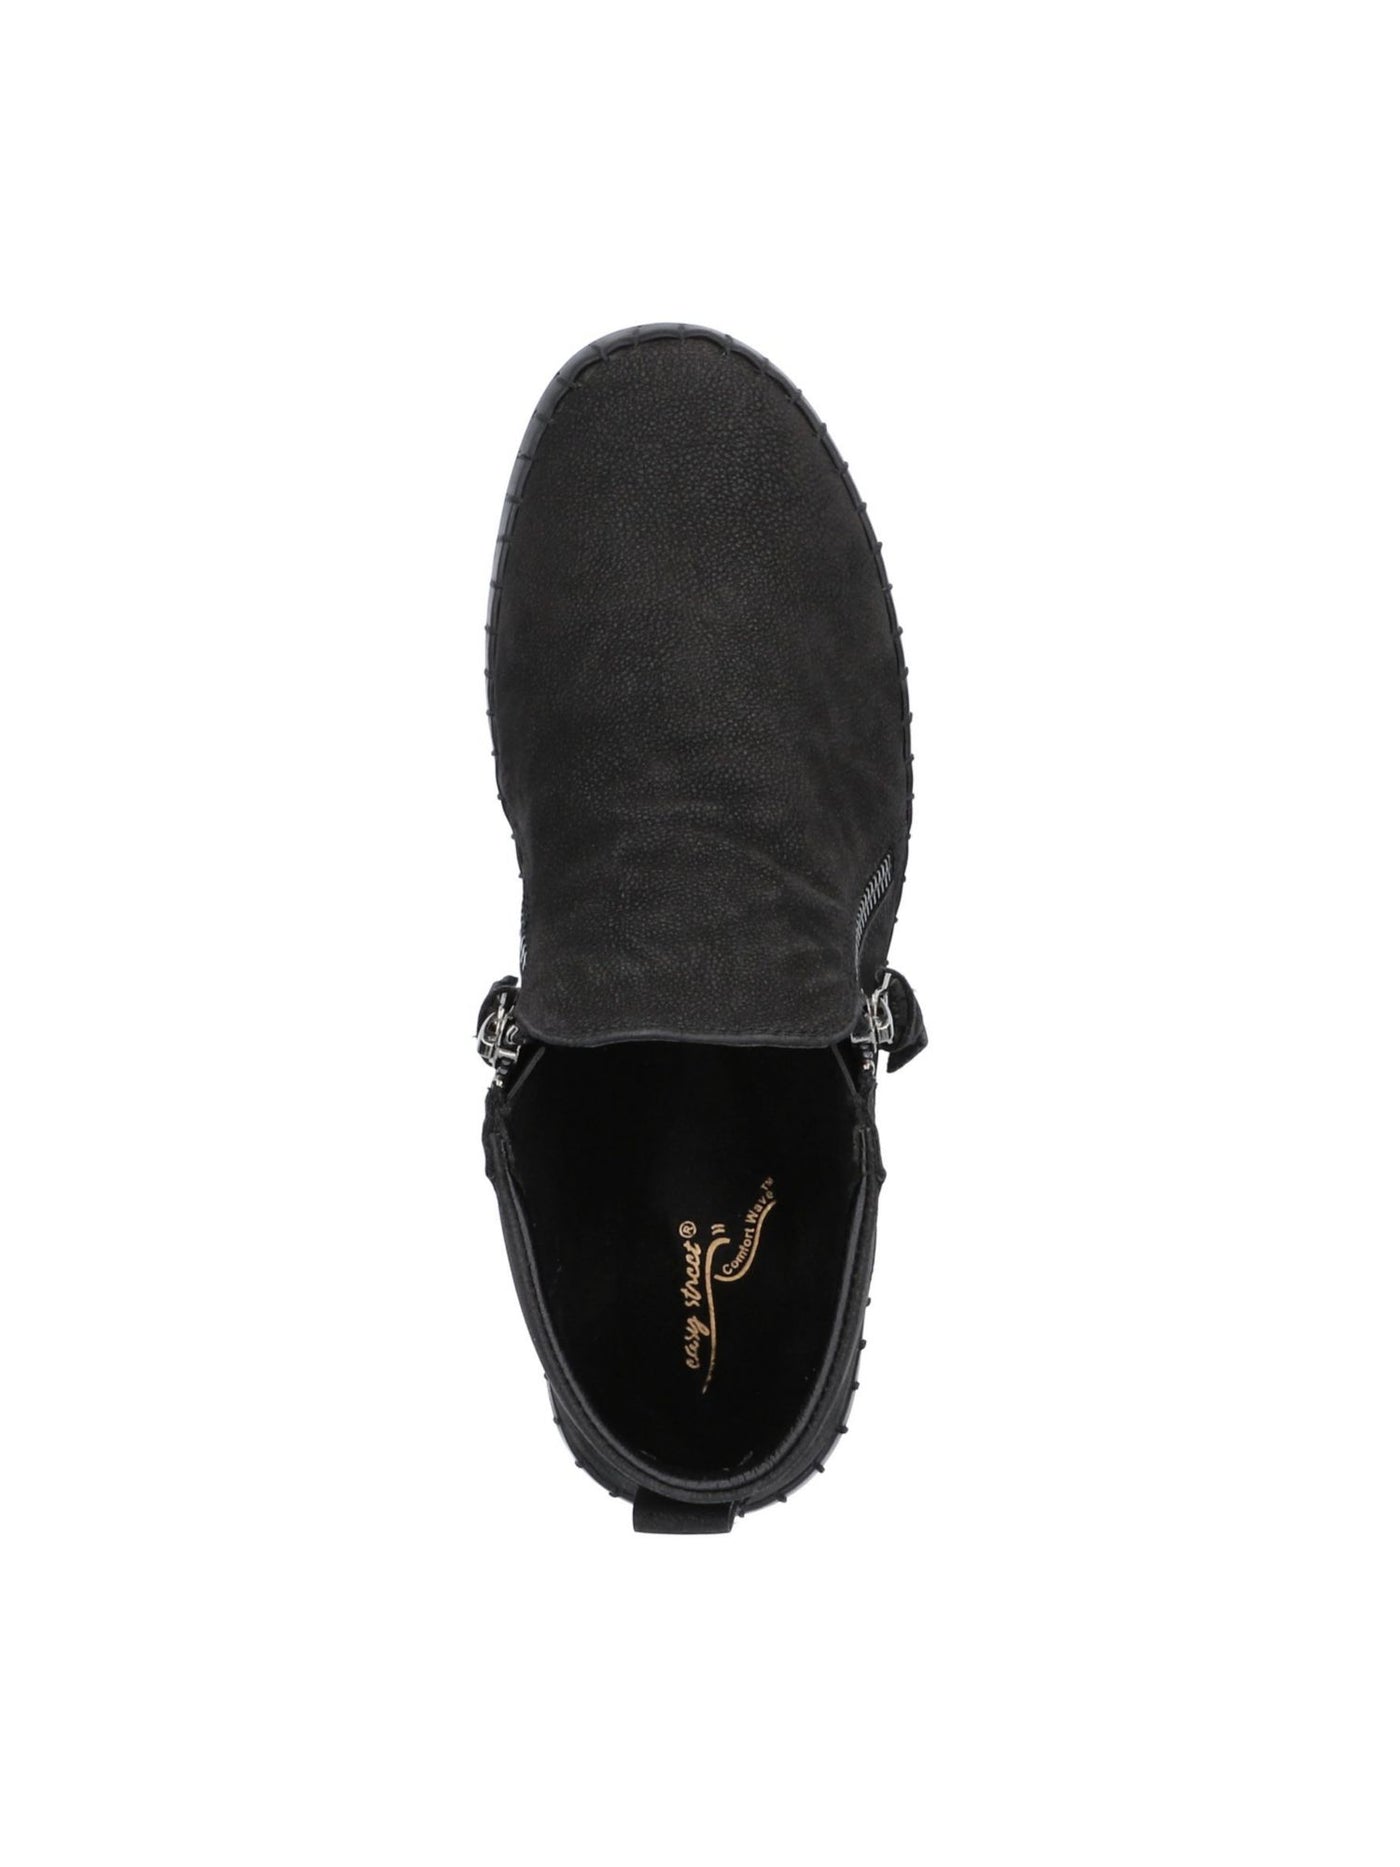 EASY STREET Womens Black 1/2" Platform Padded Comfort Shalina Round Toe Wedge Leather Booties 6.5 M